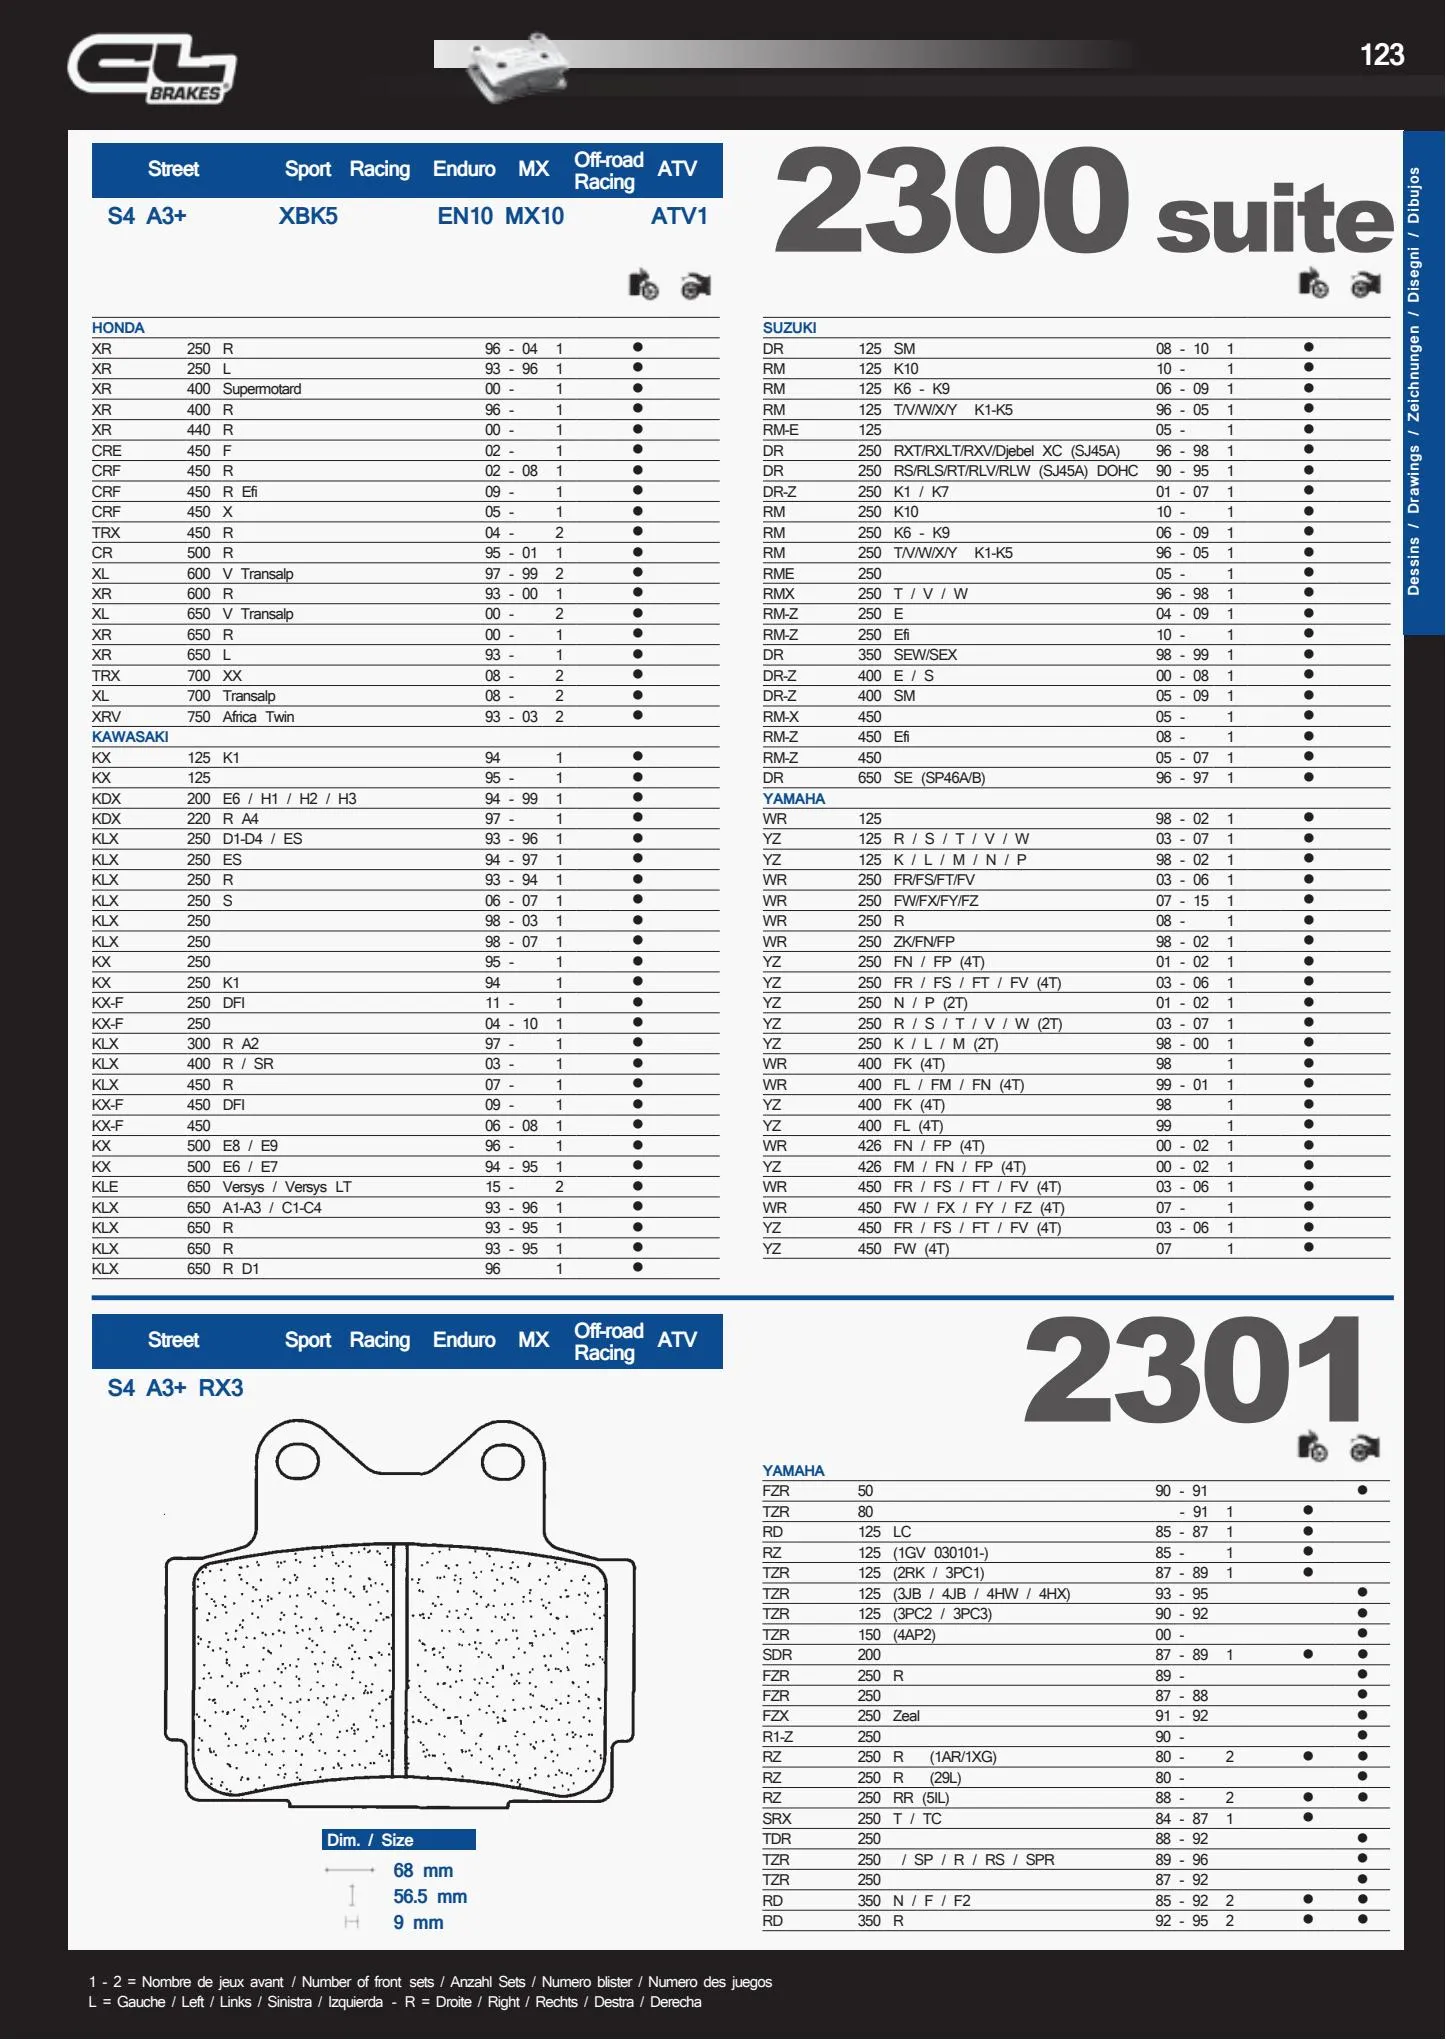 Catalogue Catalogue Bihr, page 00123